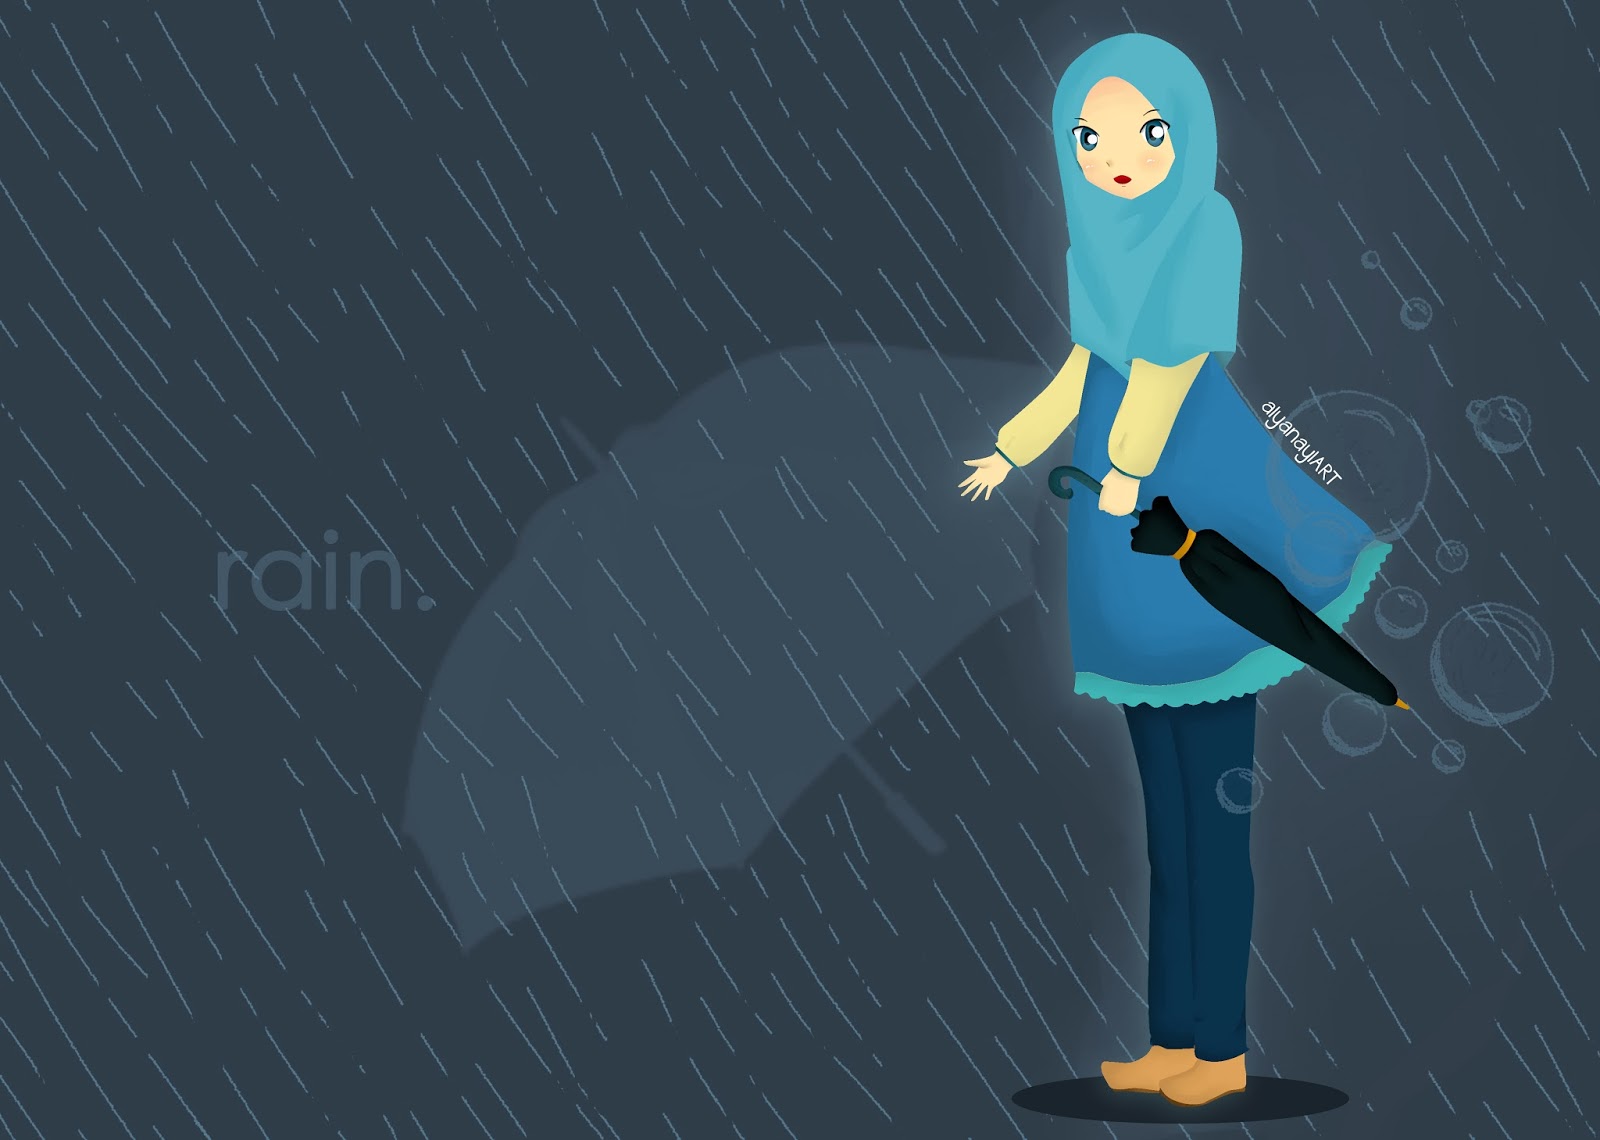 Gambar Raining Segelas Perjalanan Hari Tiba Hujan Biar Alasan